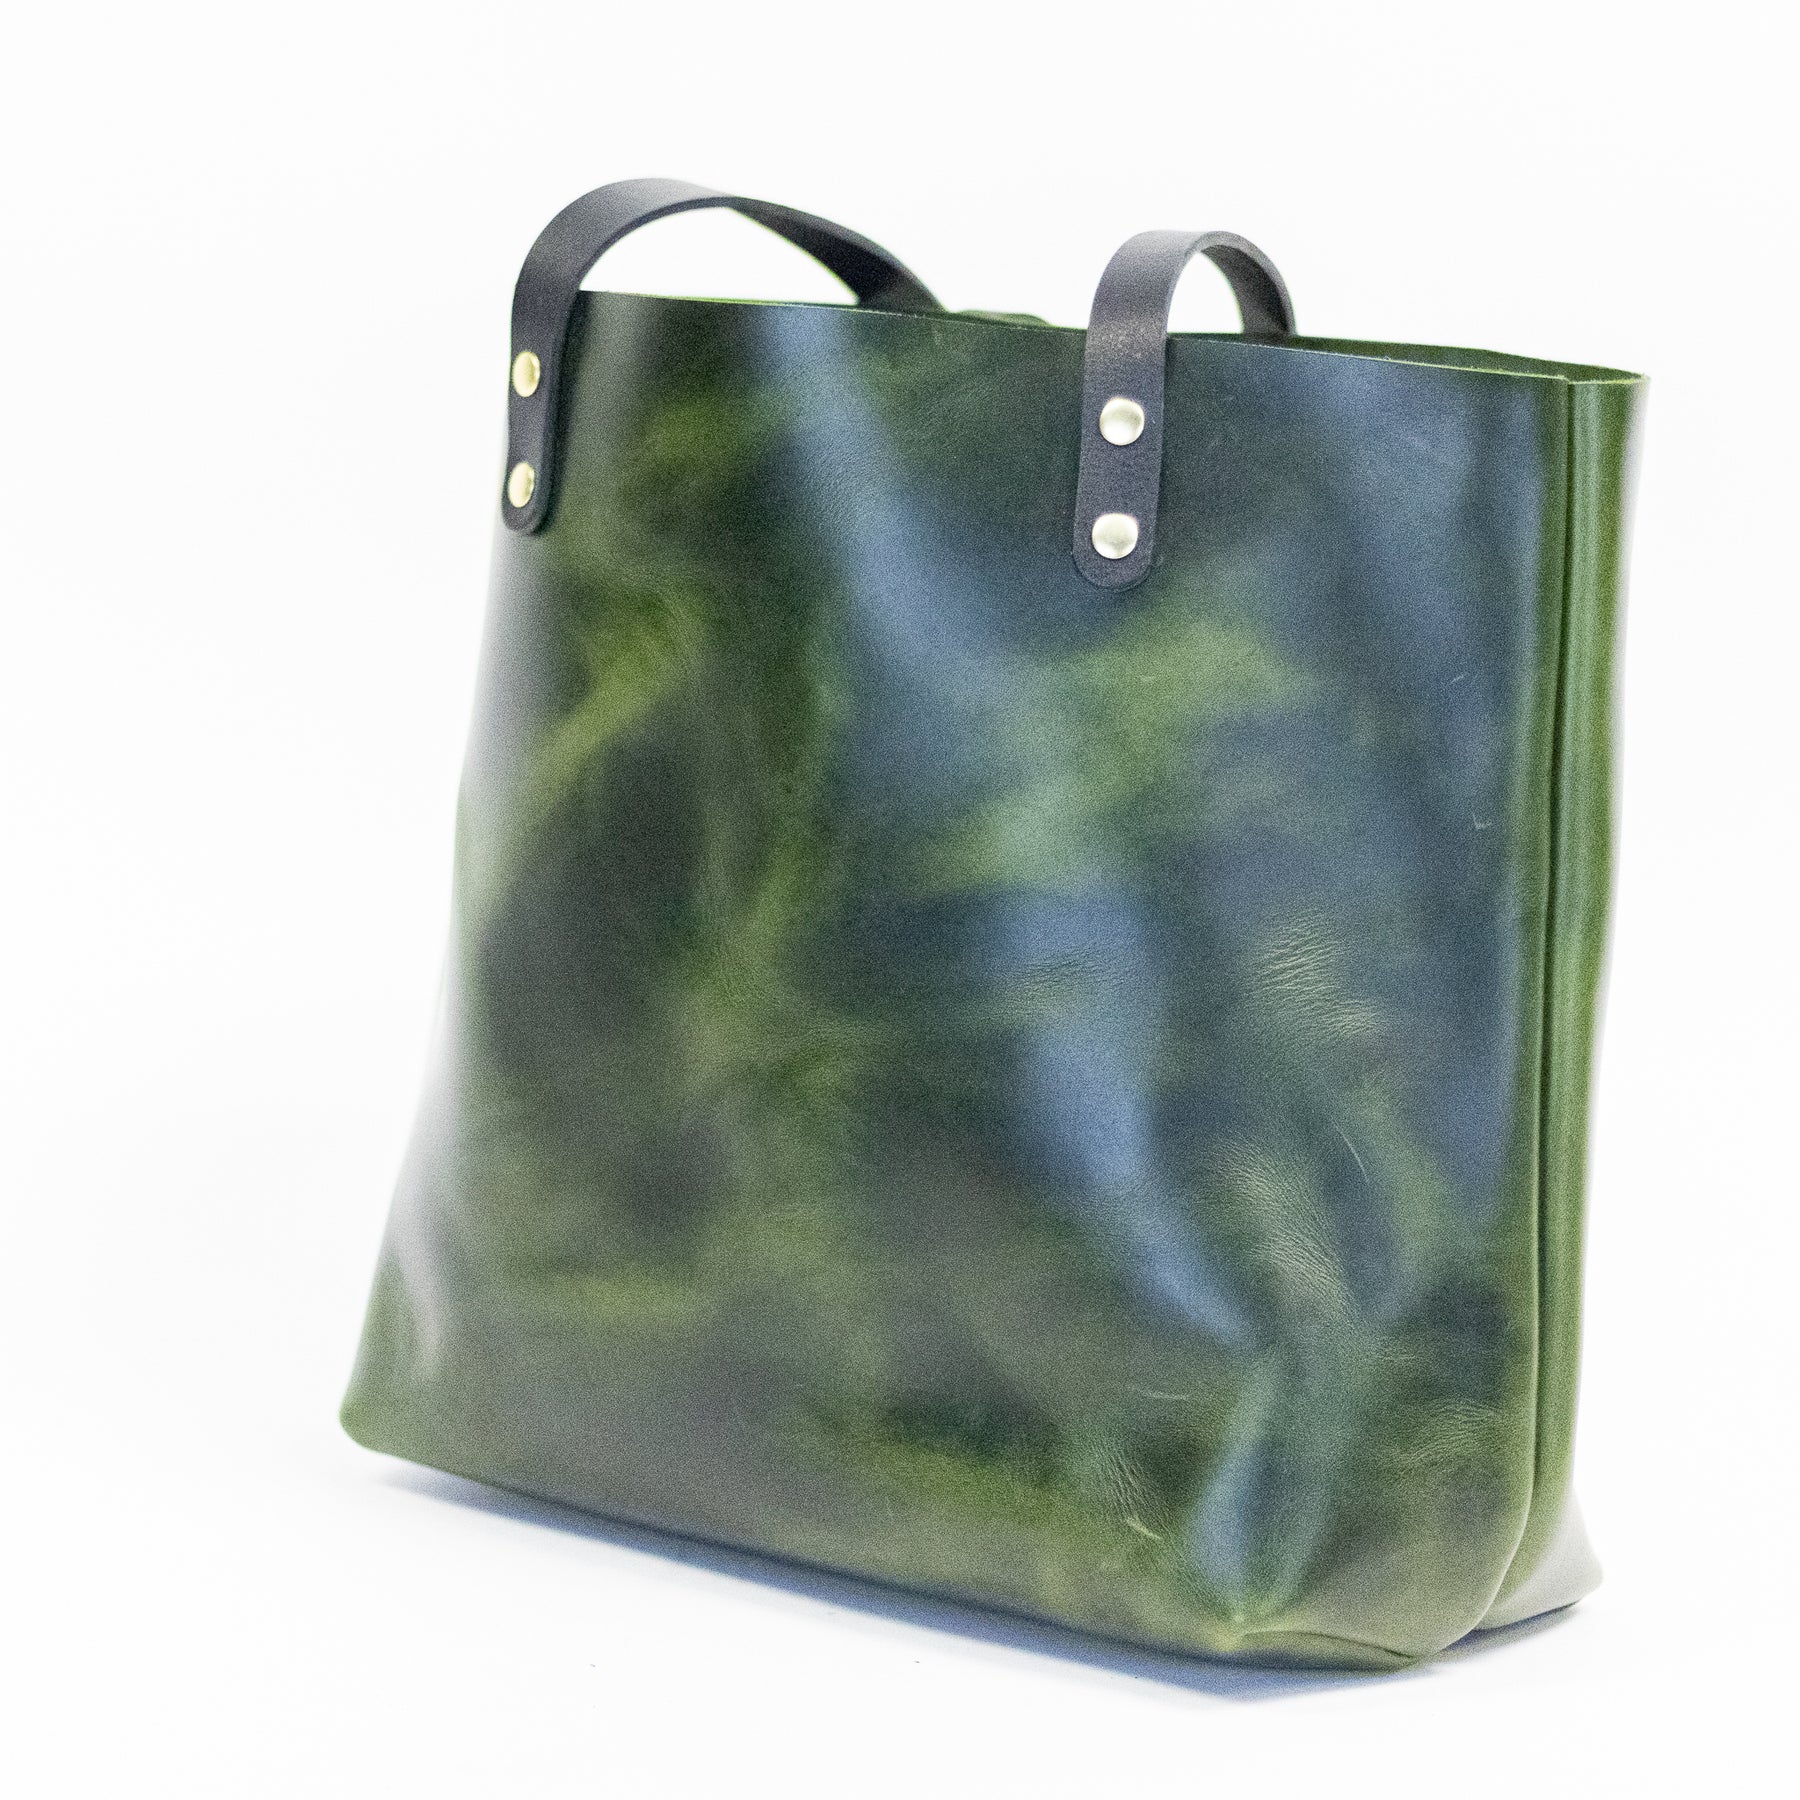 Signature sufflette leather handbag Coach Green in Leather - 37667294